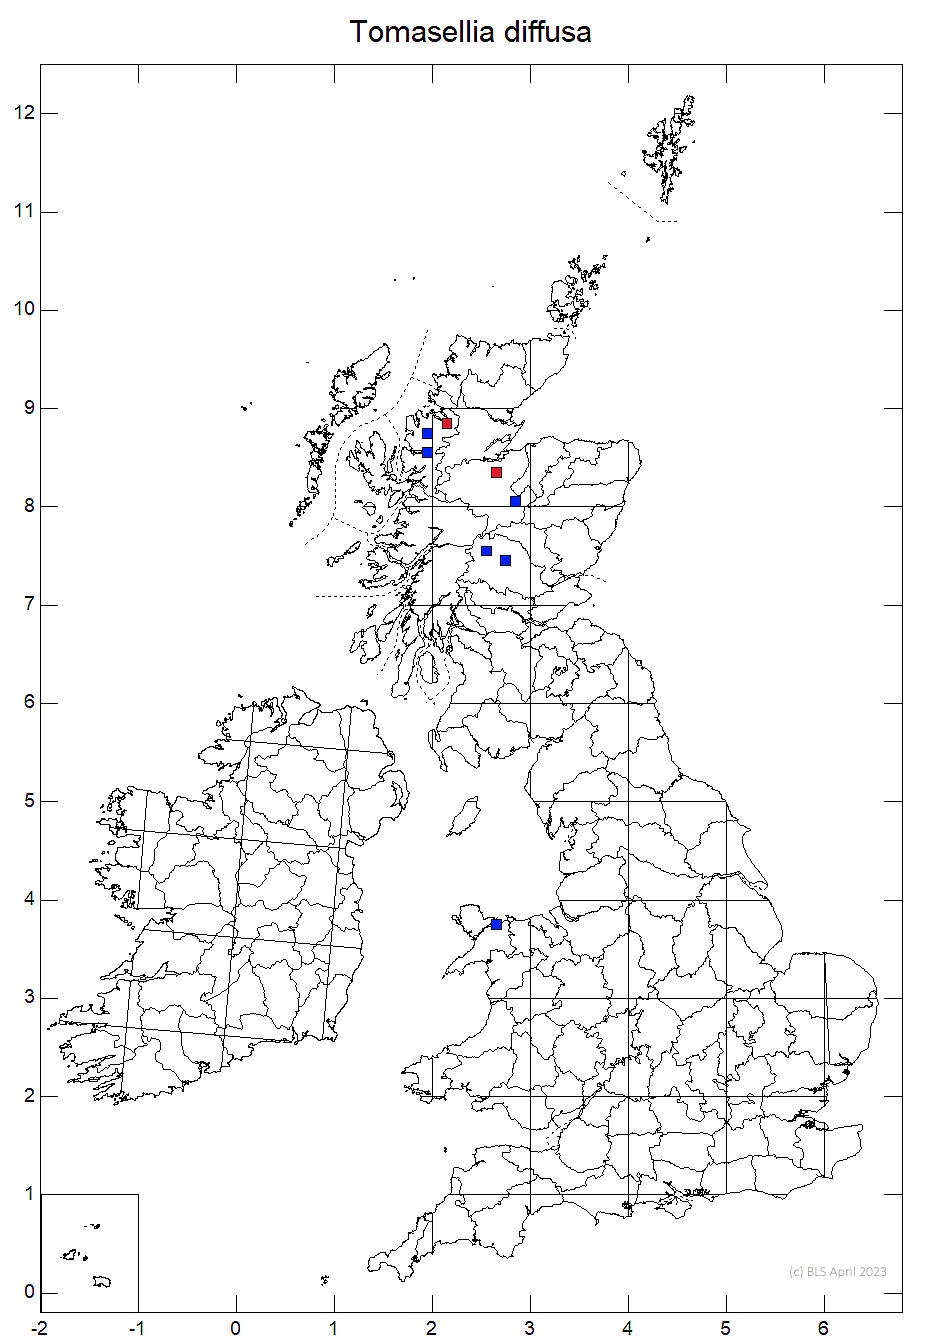 Tomasellia diffusa 10km sq distribution map